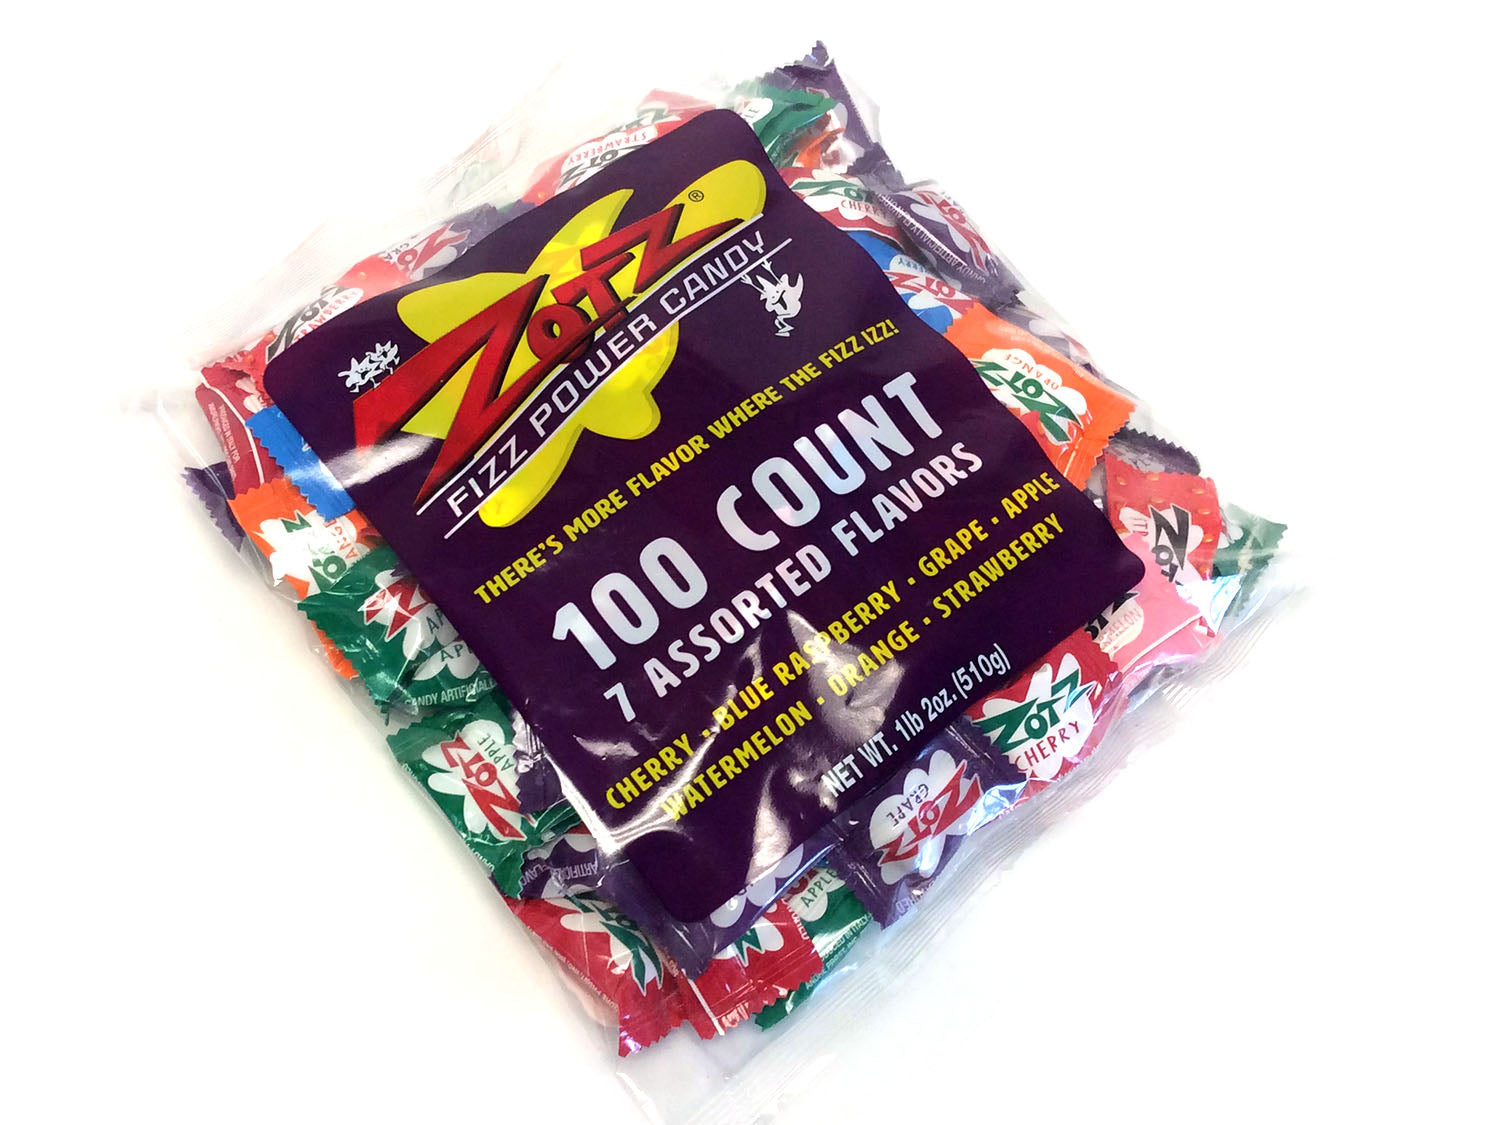 ZotZ - True Treats Historic Candy